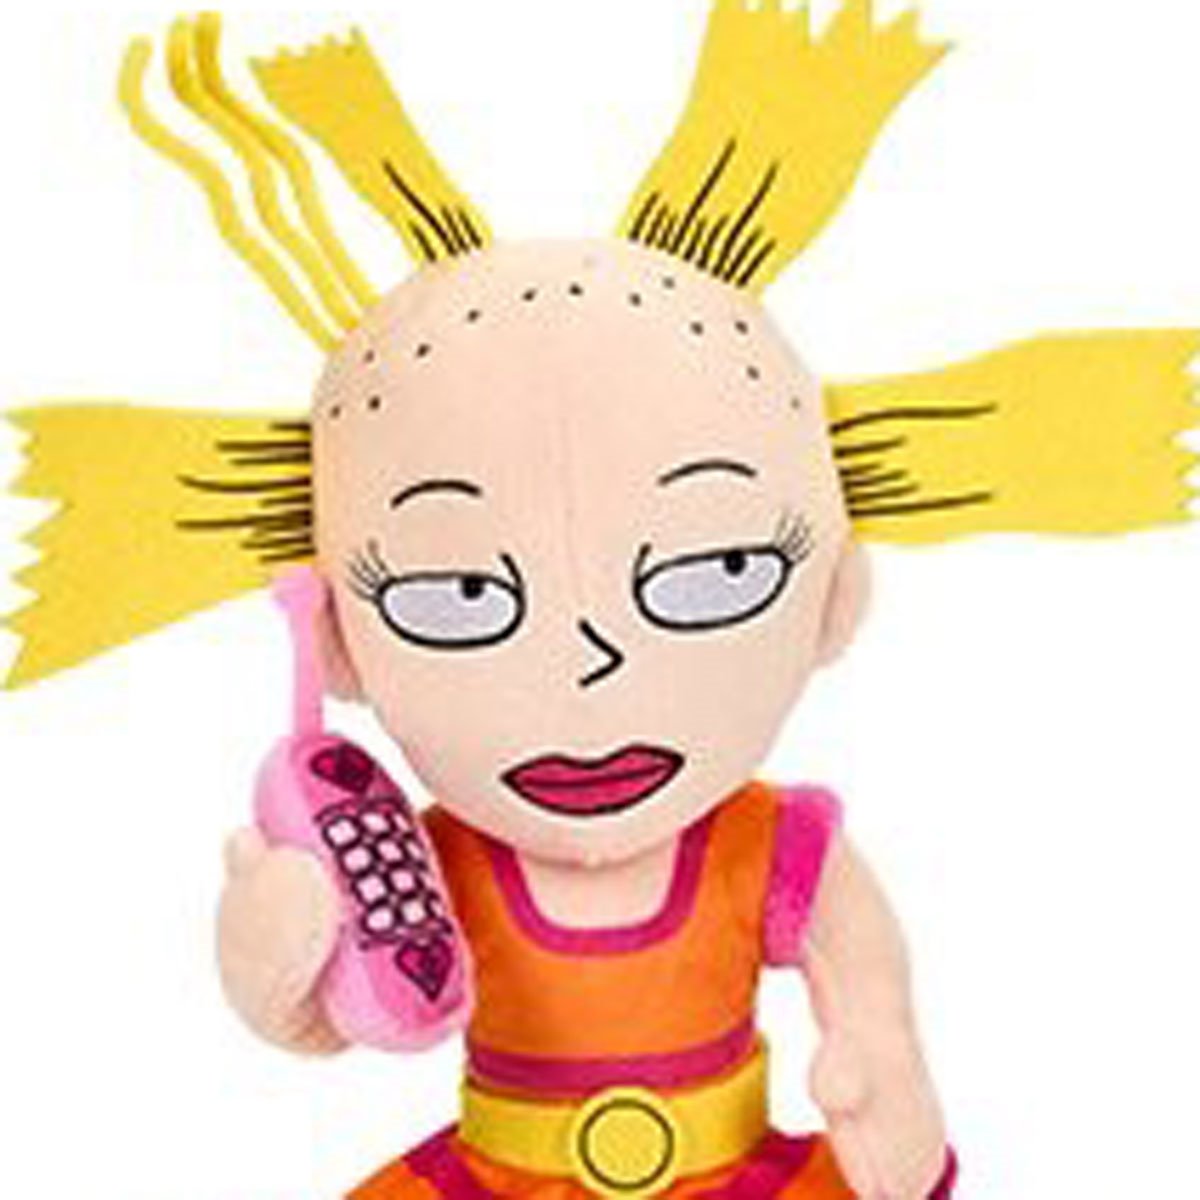 Blonde Doll From Rugrats superbowl redemption